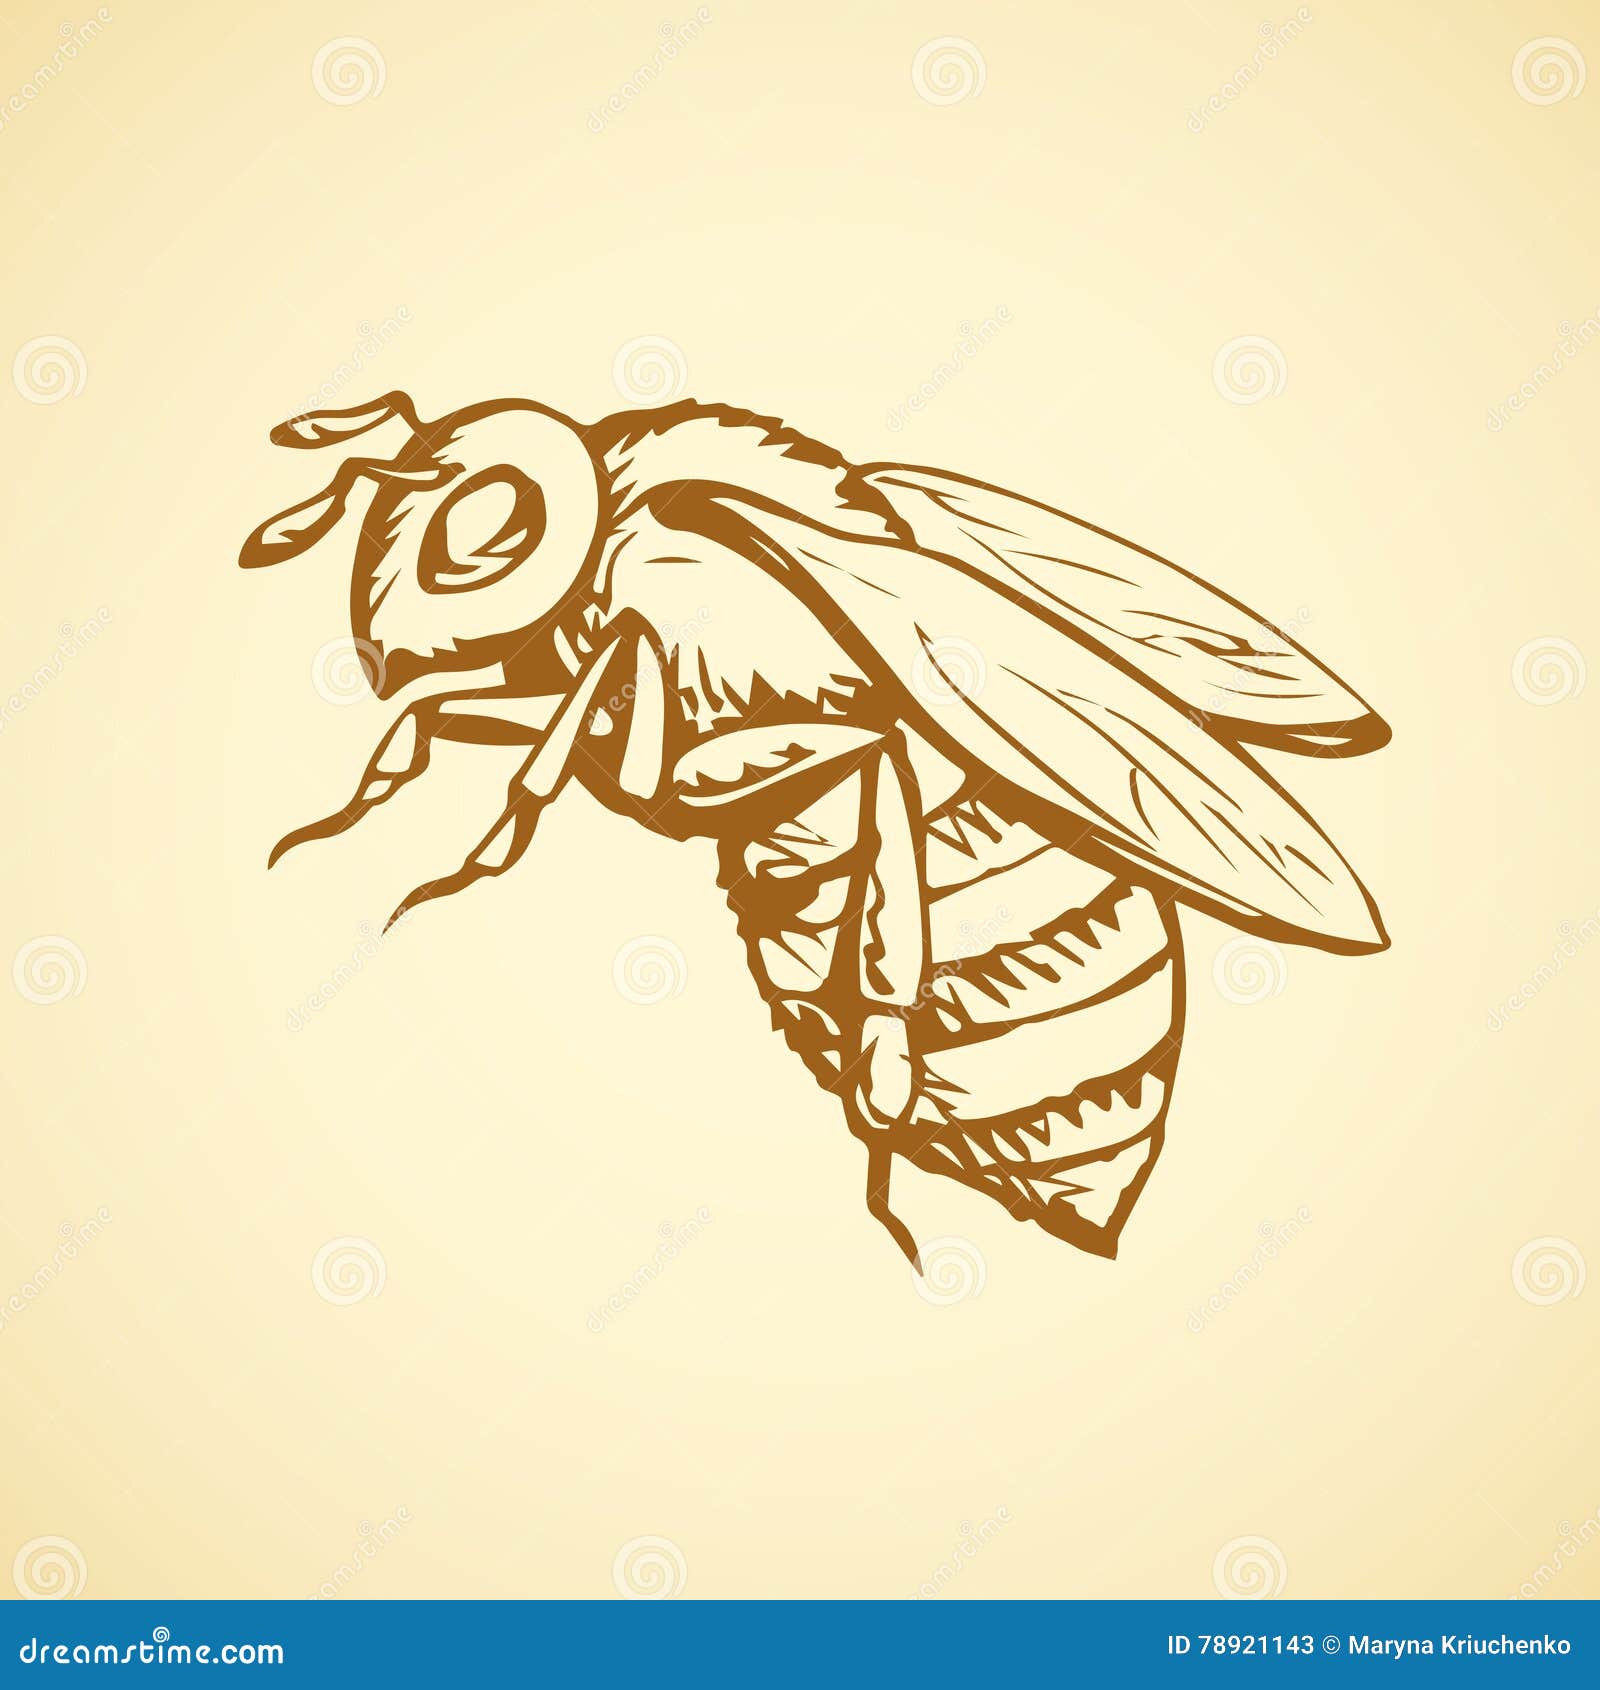 Premium Vector  Vector engraving illustration of honey bee on white  background